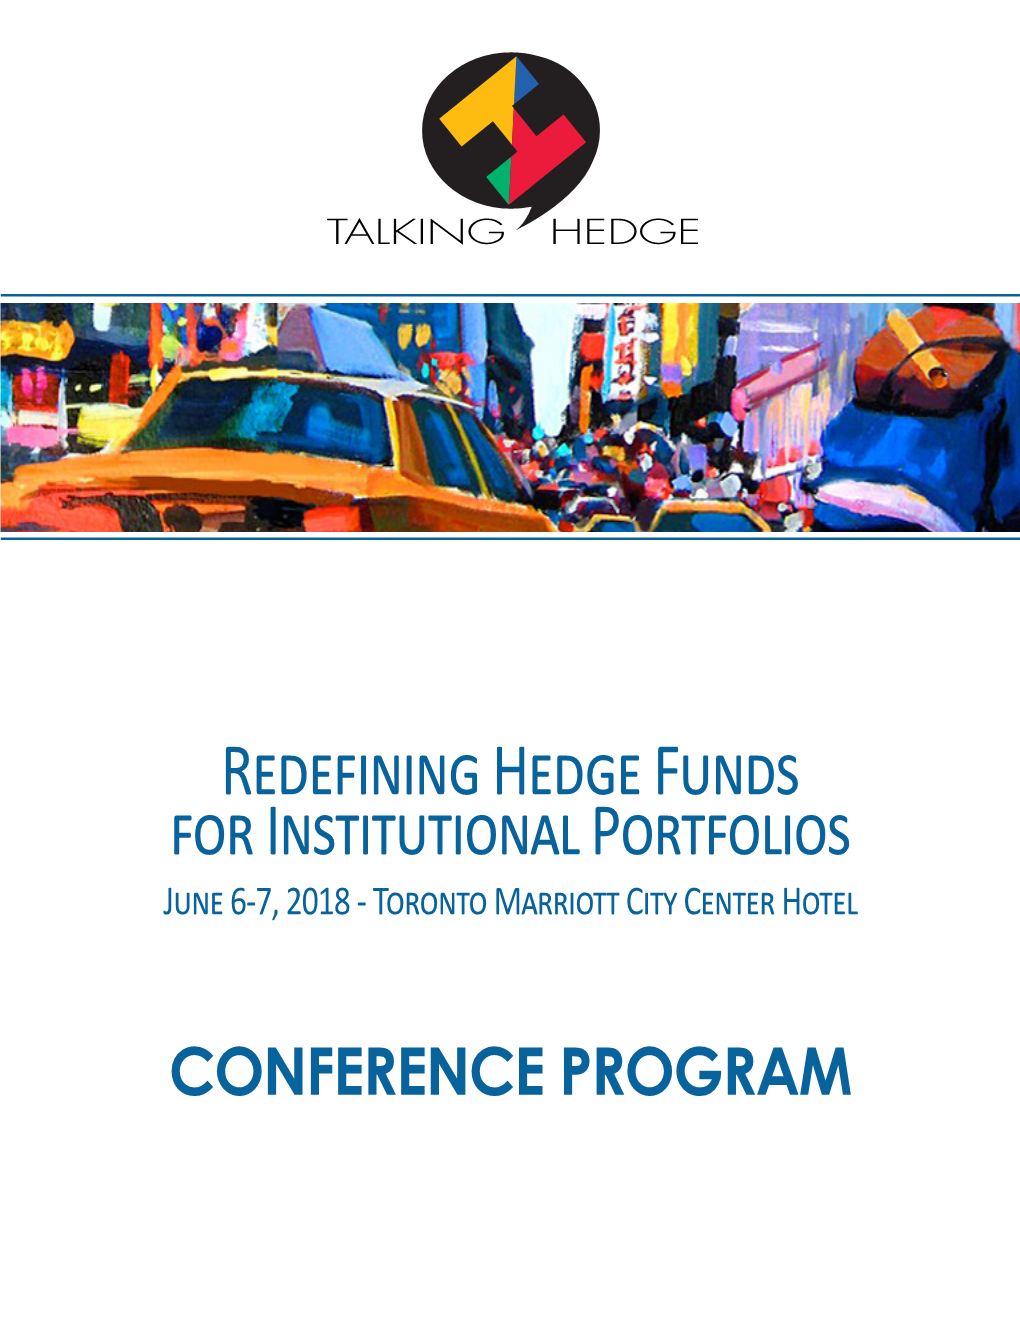 Redefining Hedge Funds for Institutional Portfolios June 6-7, 2018 - Toronto Marriott City Center Hotel